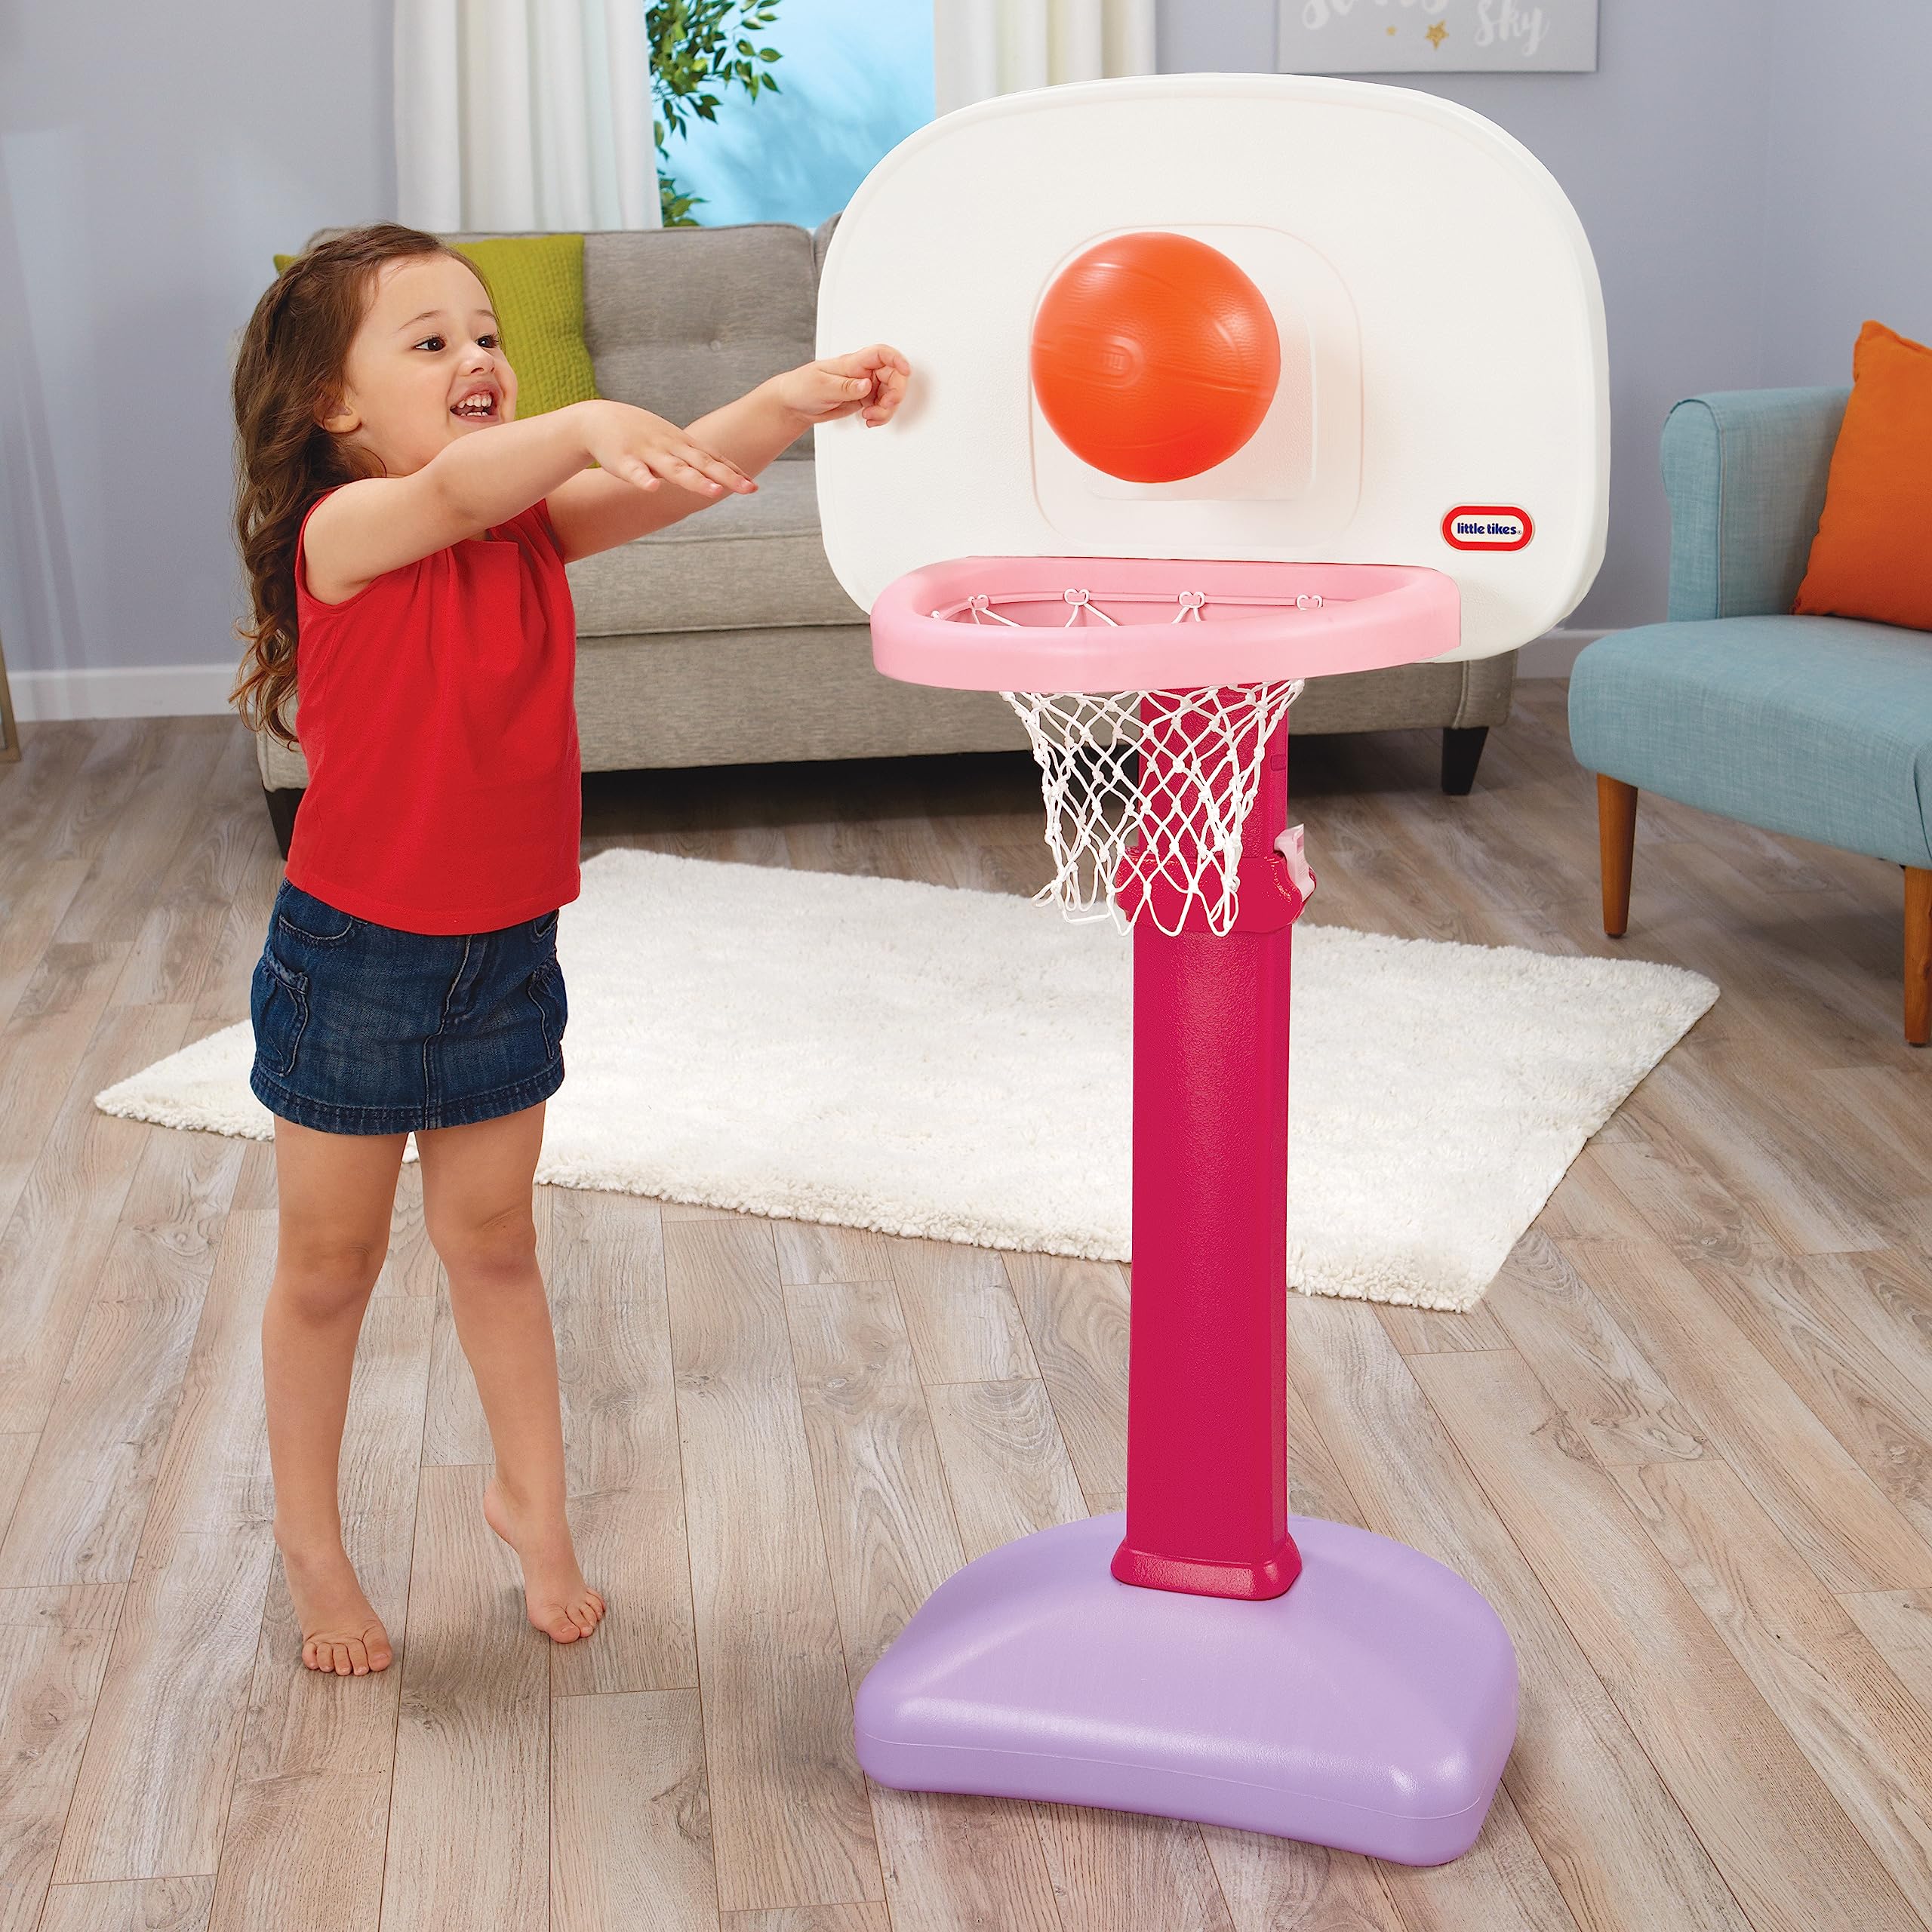 Little Tikes Easy Score Basketball Set, Pink- Amazon Exclusive